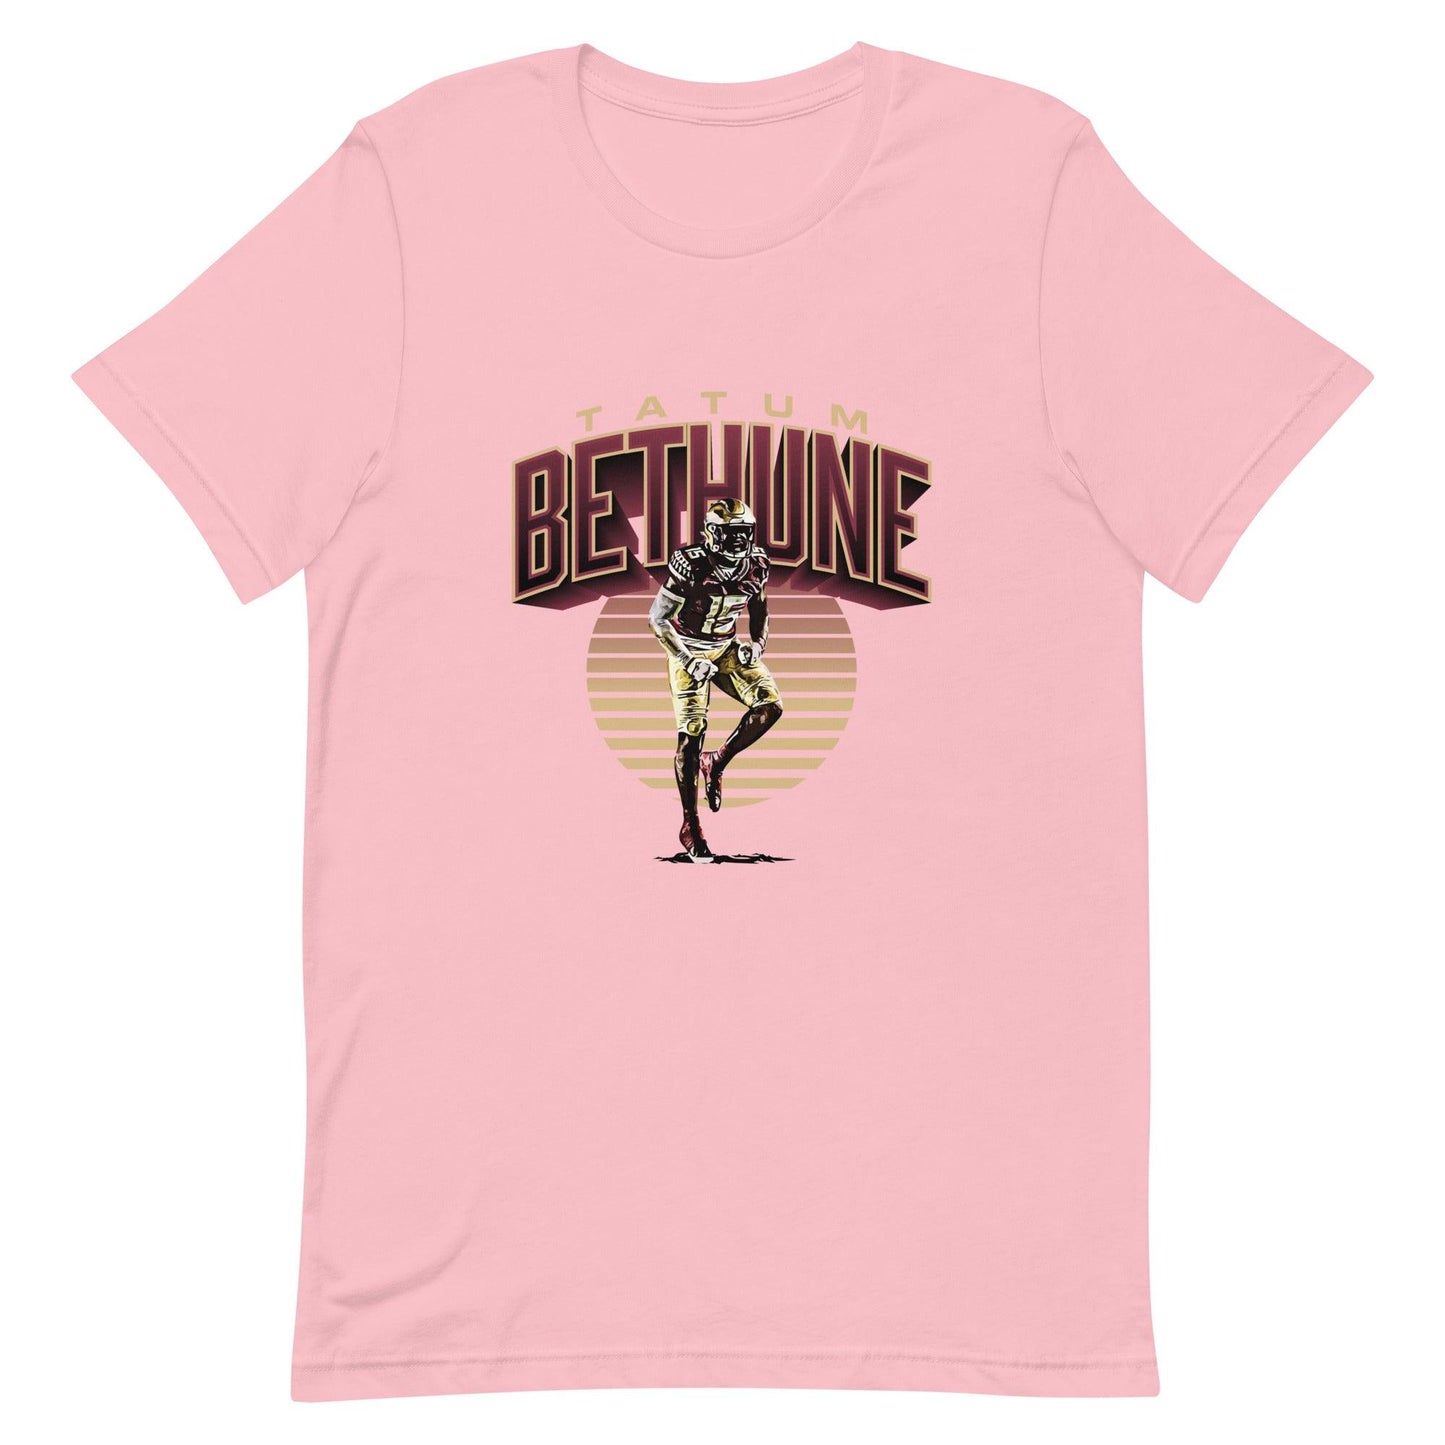 Tatum Bethune "Gameday" t-shirt - Fan Arch